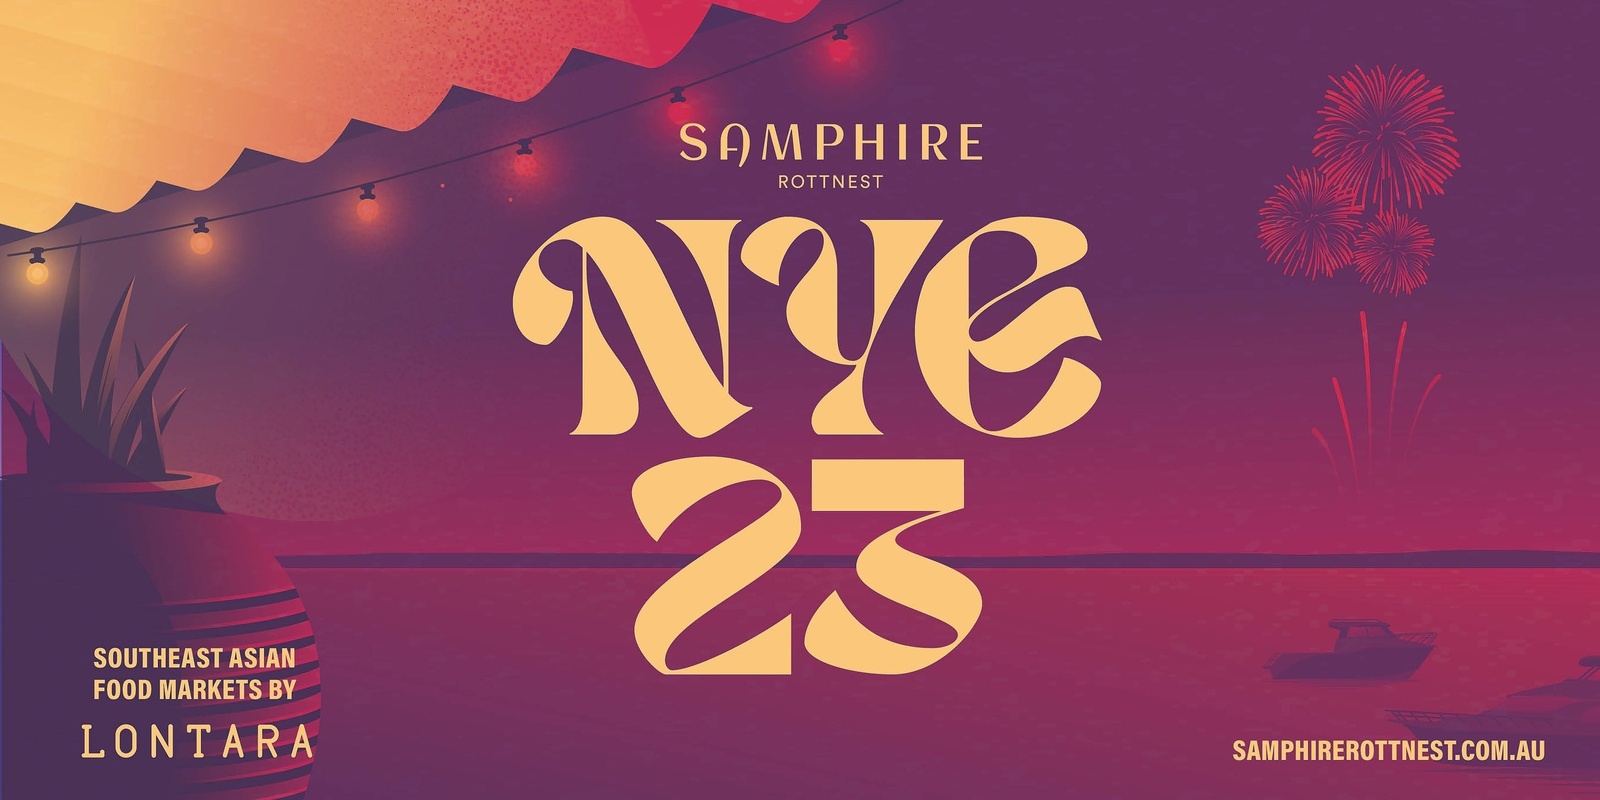 Banner image for Samphire VIP New Year's Eve: Senses of Samphire 